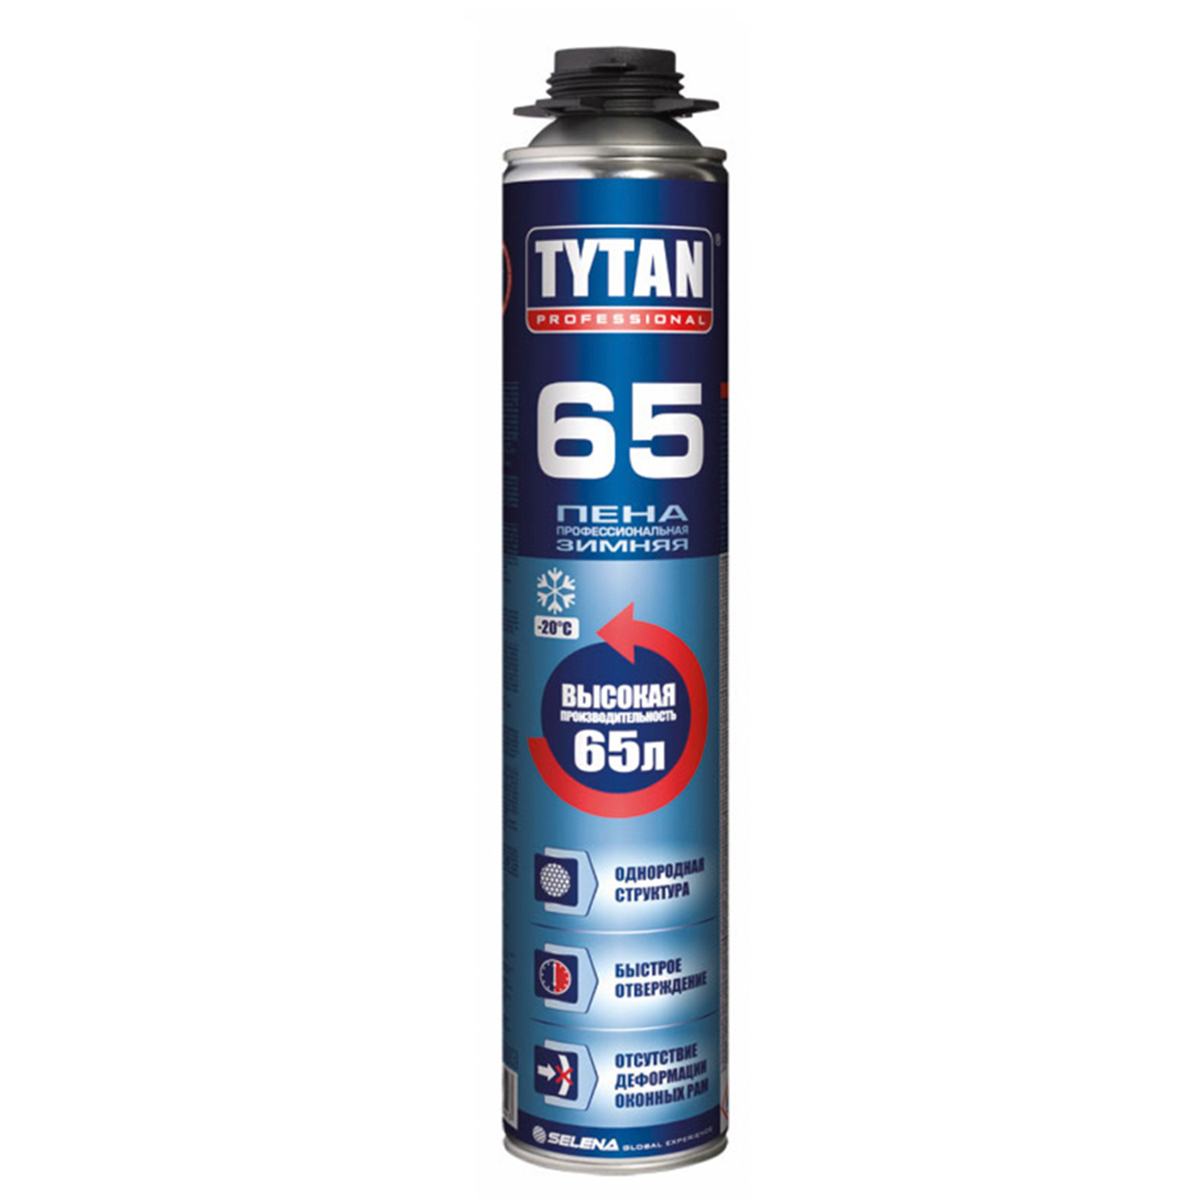 TYTAN Professional 65   